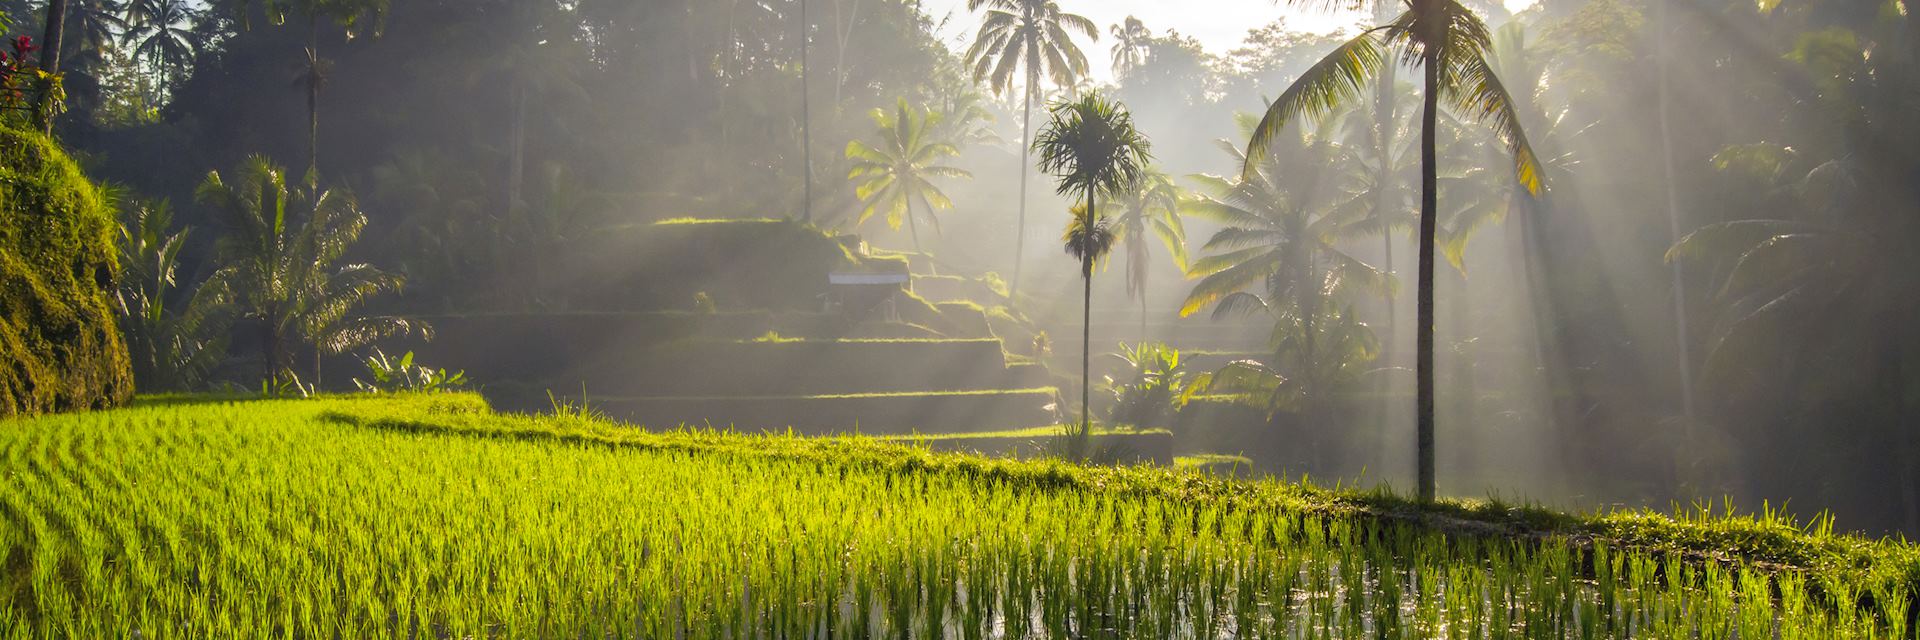 Rice terraces, Ubud